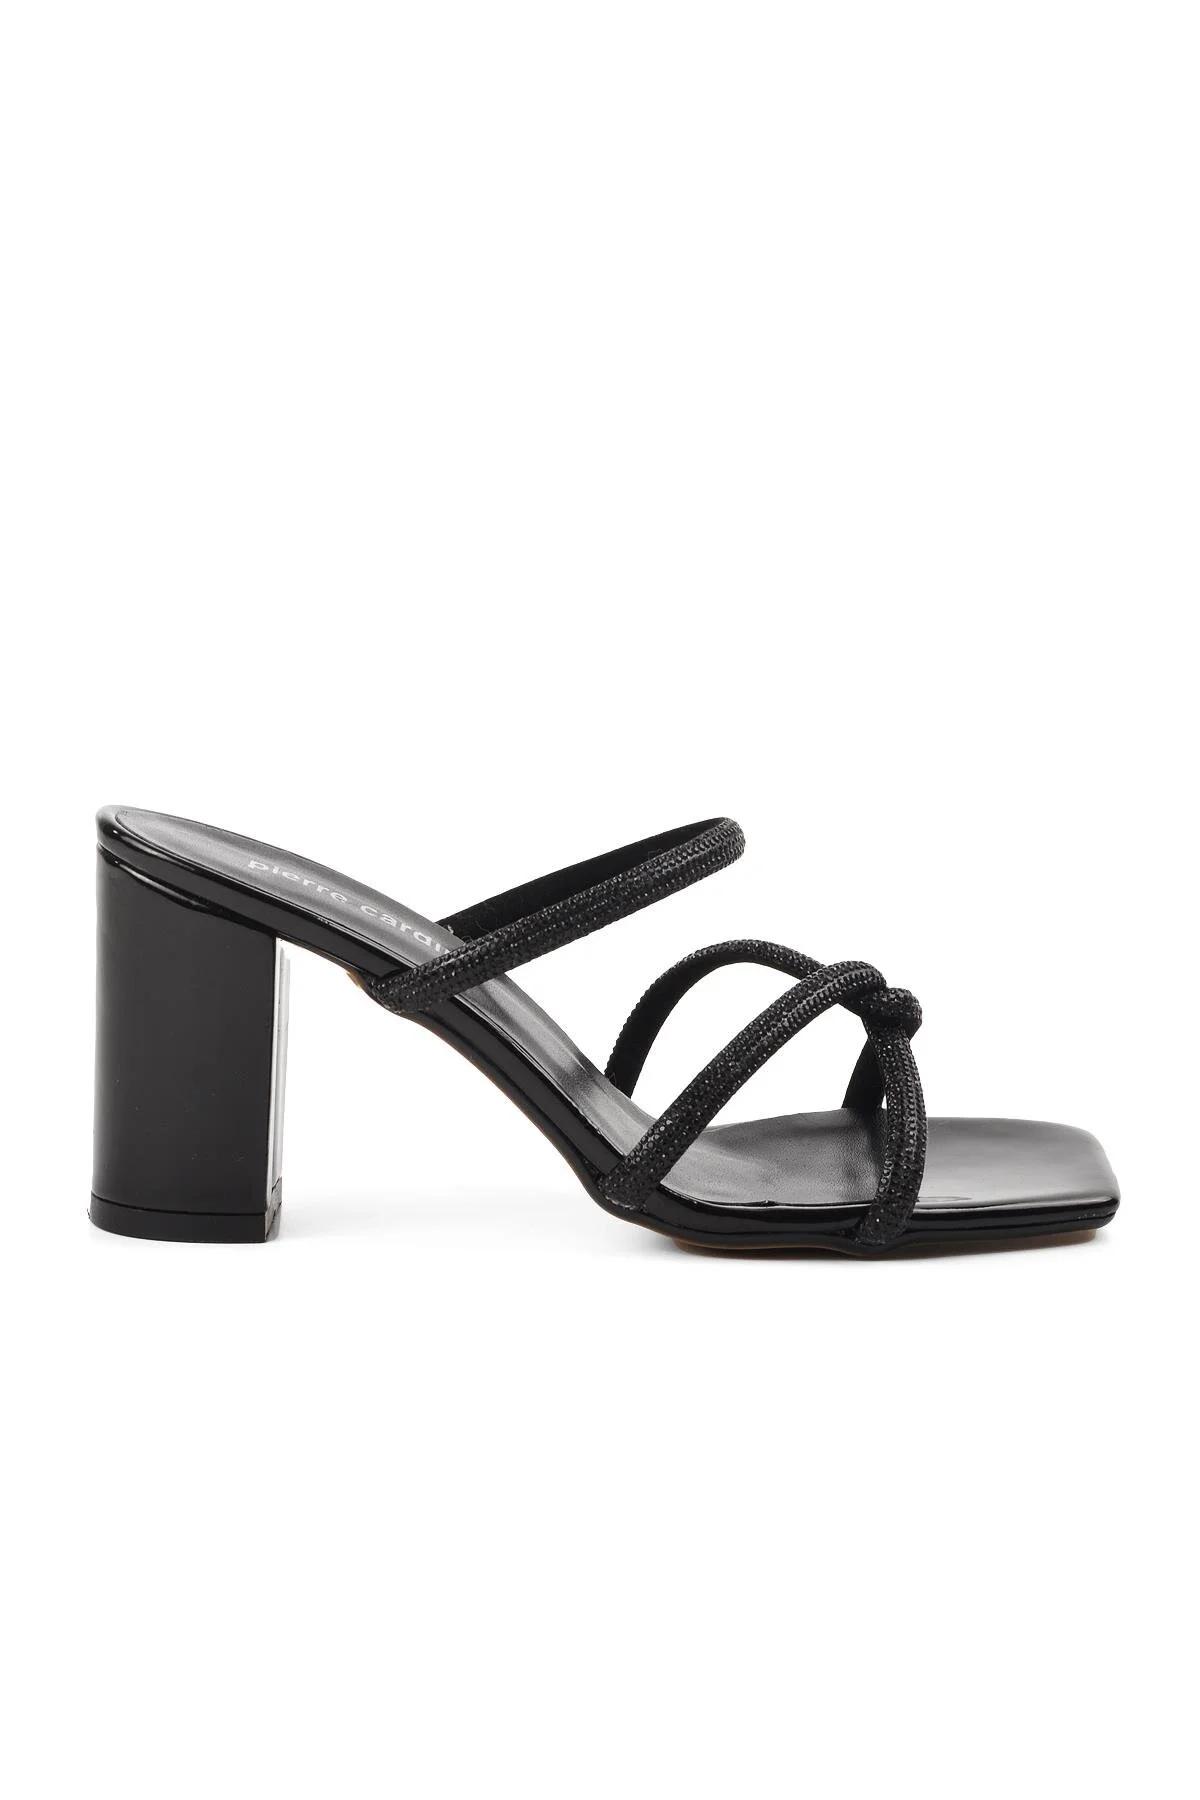 Kadın Topuklu Ayakkabı PC-52218-Siyah